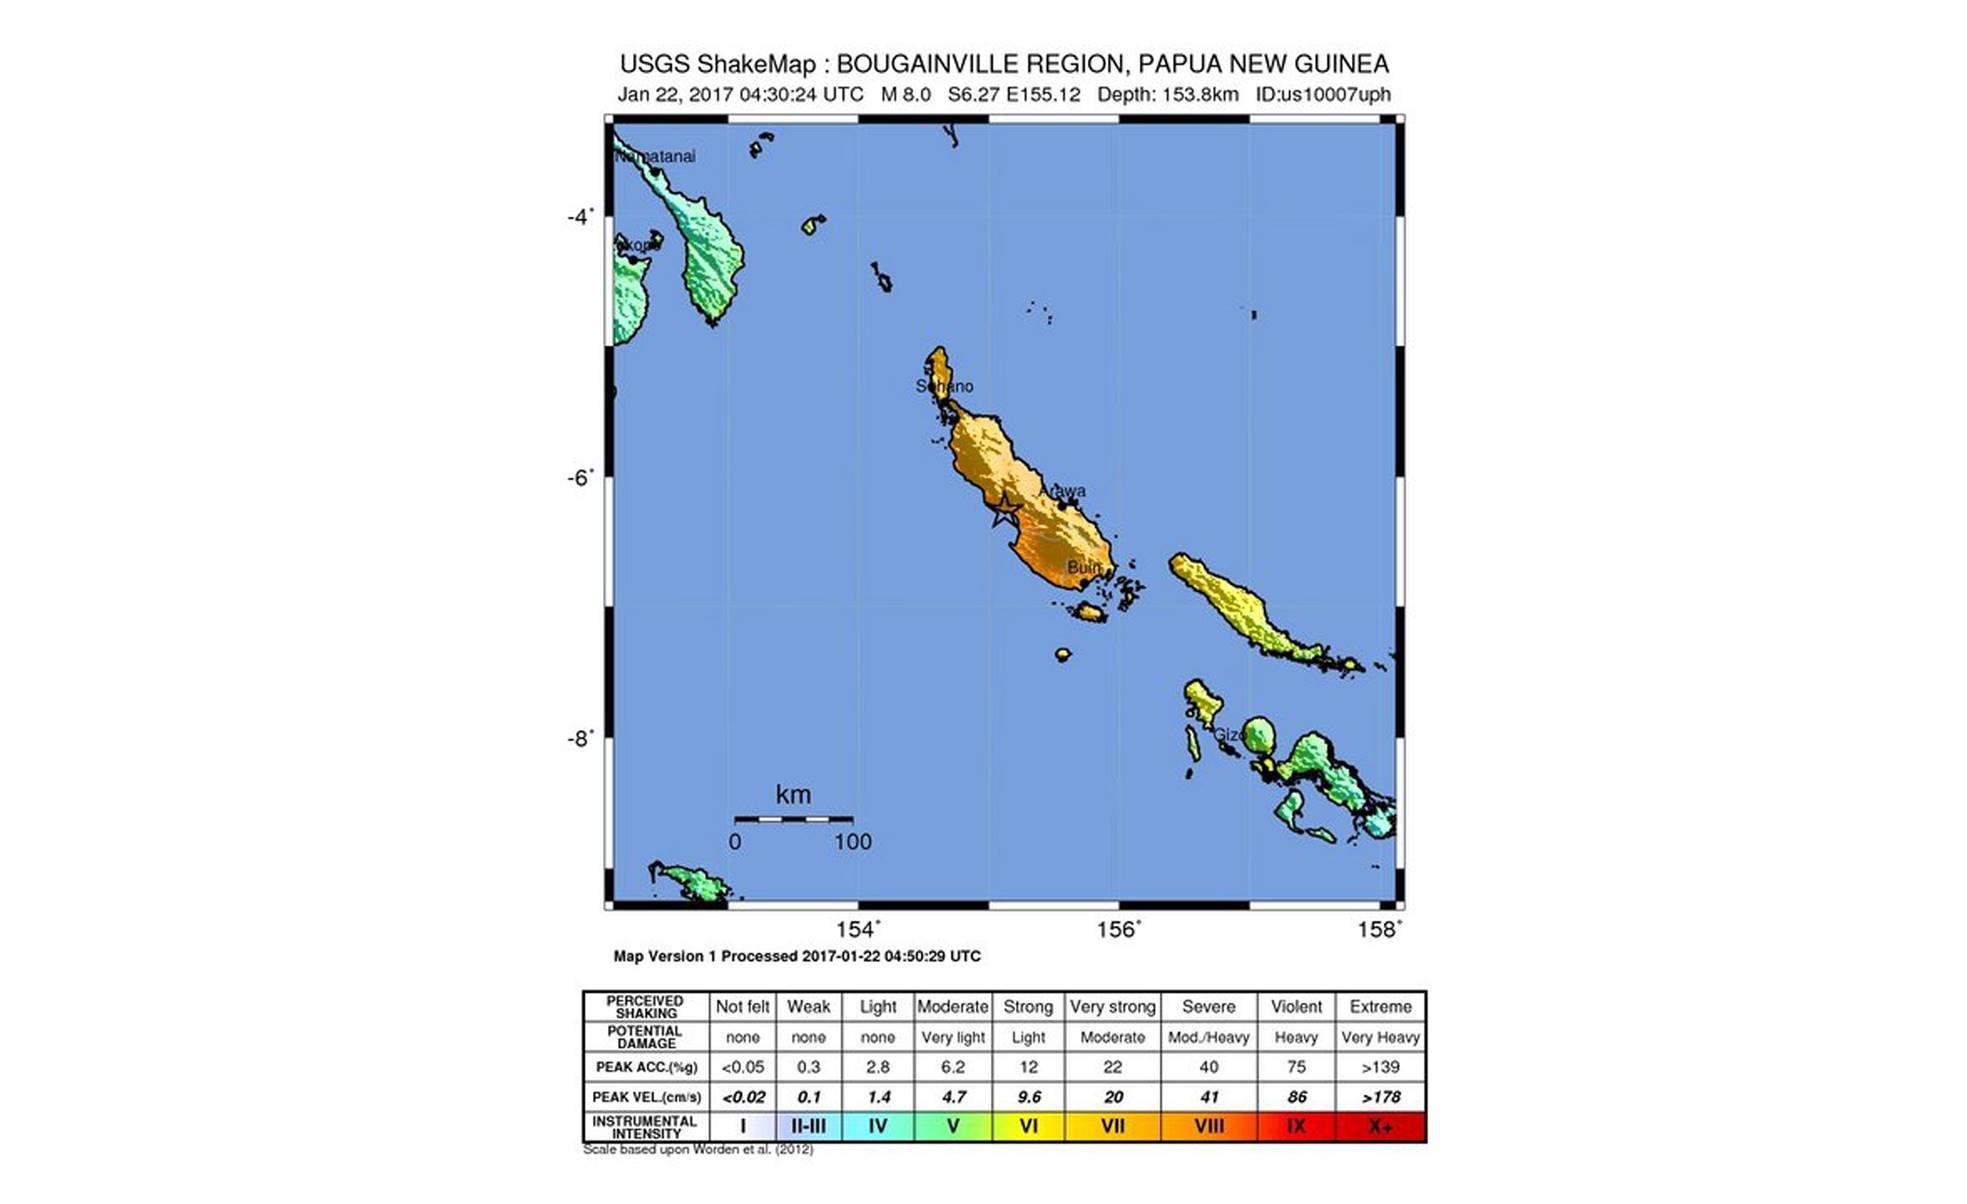 Se limita alerta de tsunami a Papúa Nueva Guinea e Islas Salomón